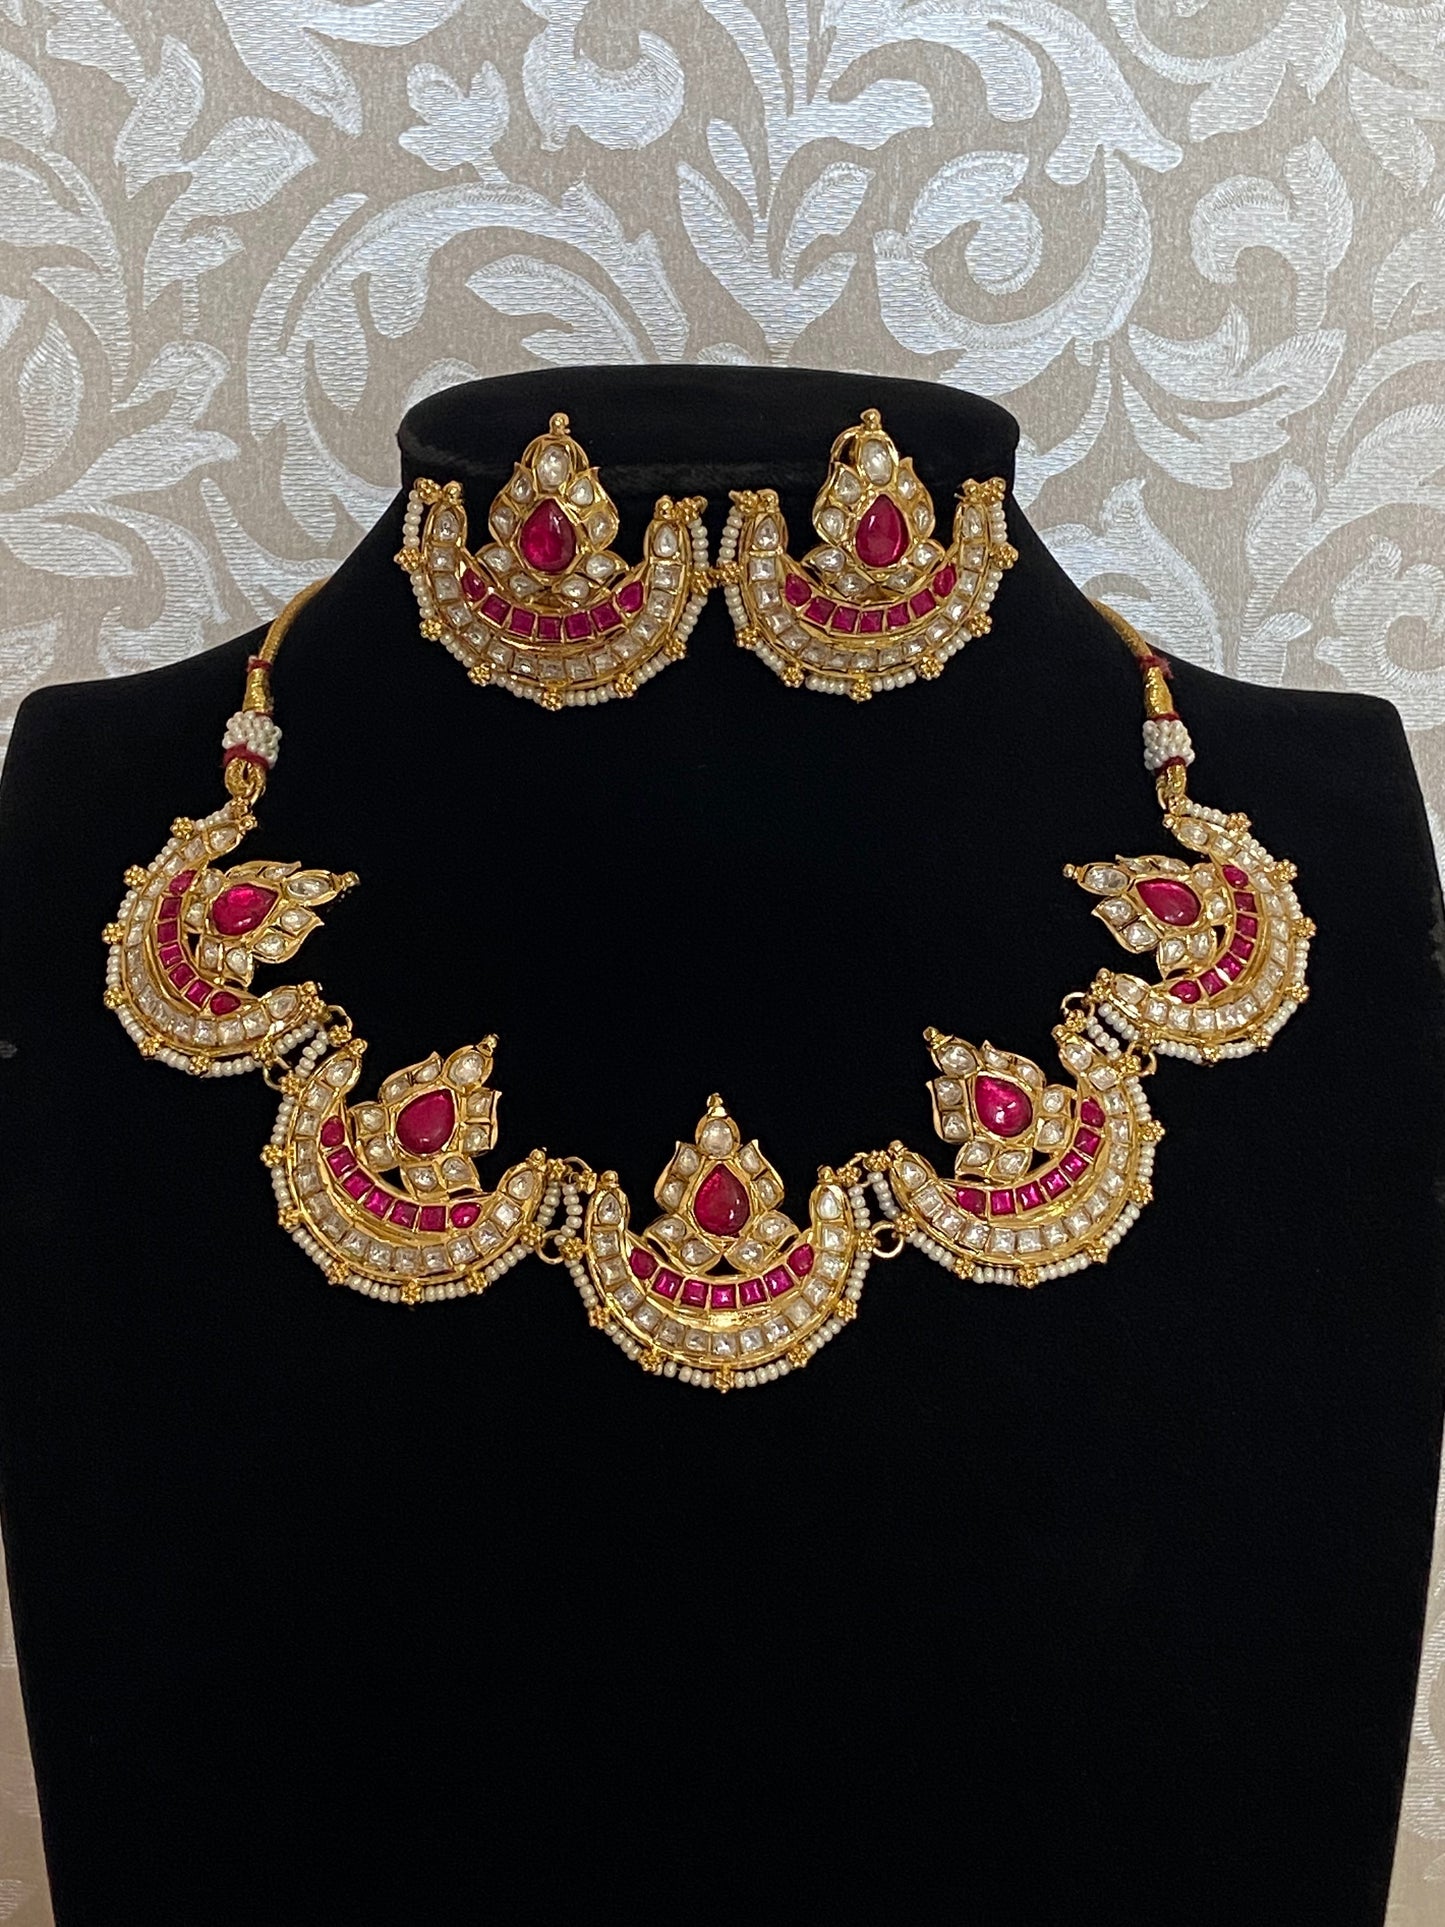 Jadau Kundan necklace | Indian jewelry in USA | Latest Indian jewelry